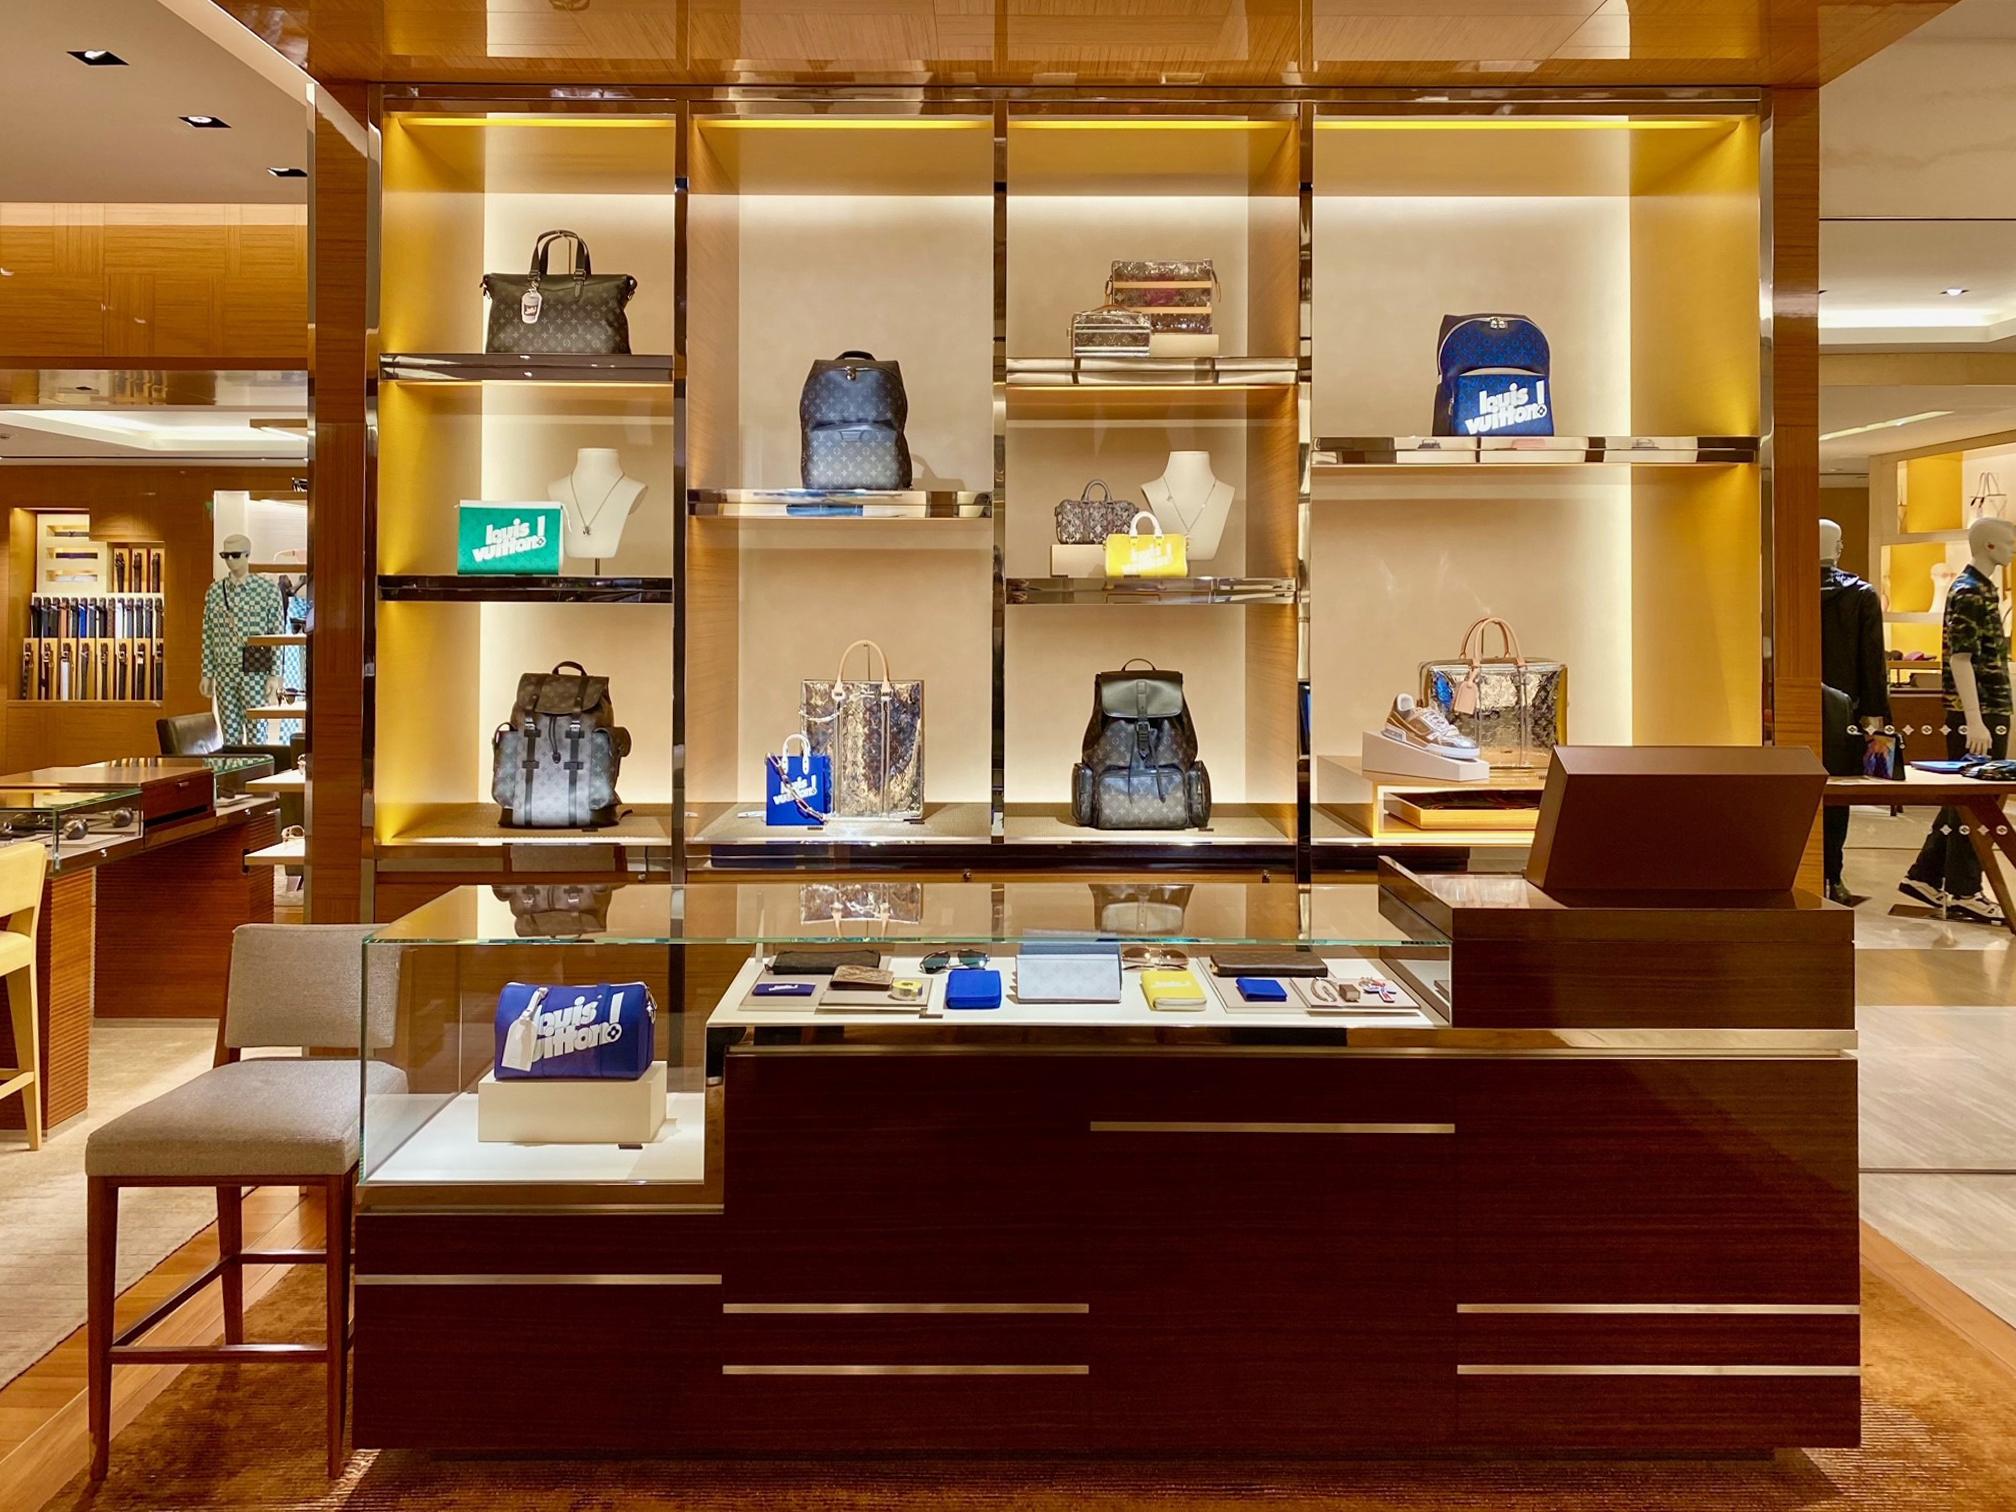 Louis Vuitton Yokohama Sogo store, Japan